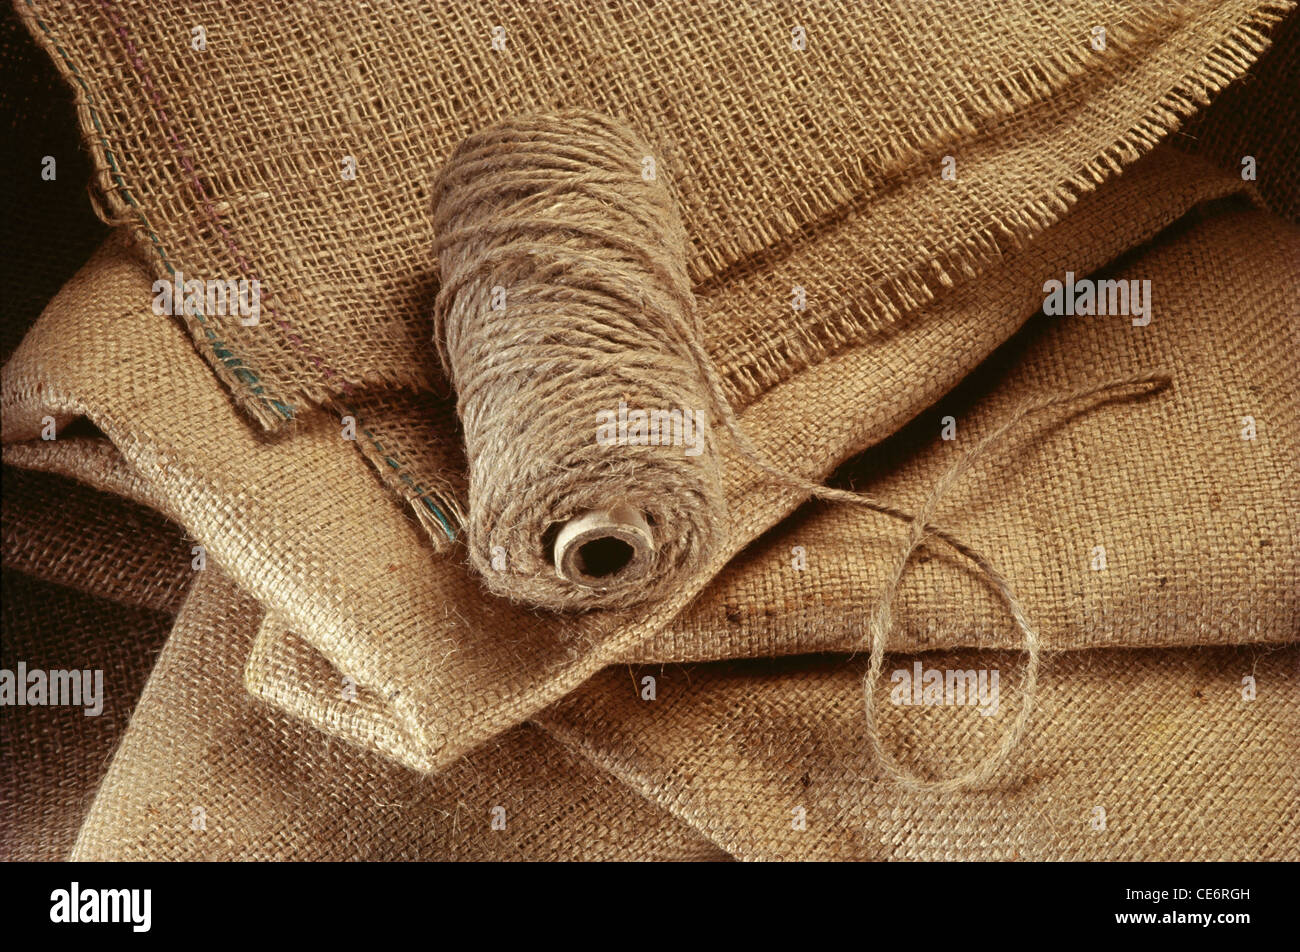 RJP 85779 : jute fabrics textiles cloth thread yarn products india Stock Photo